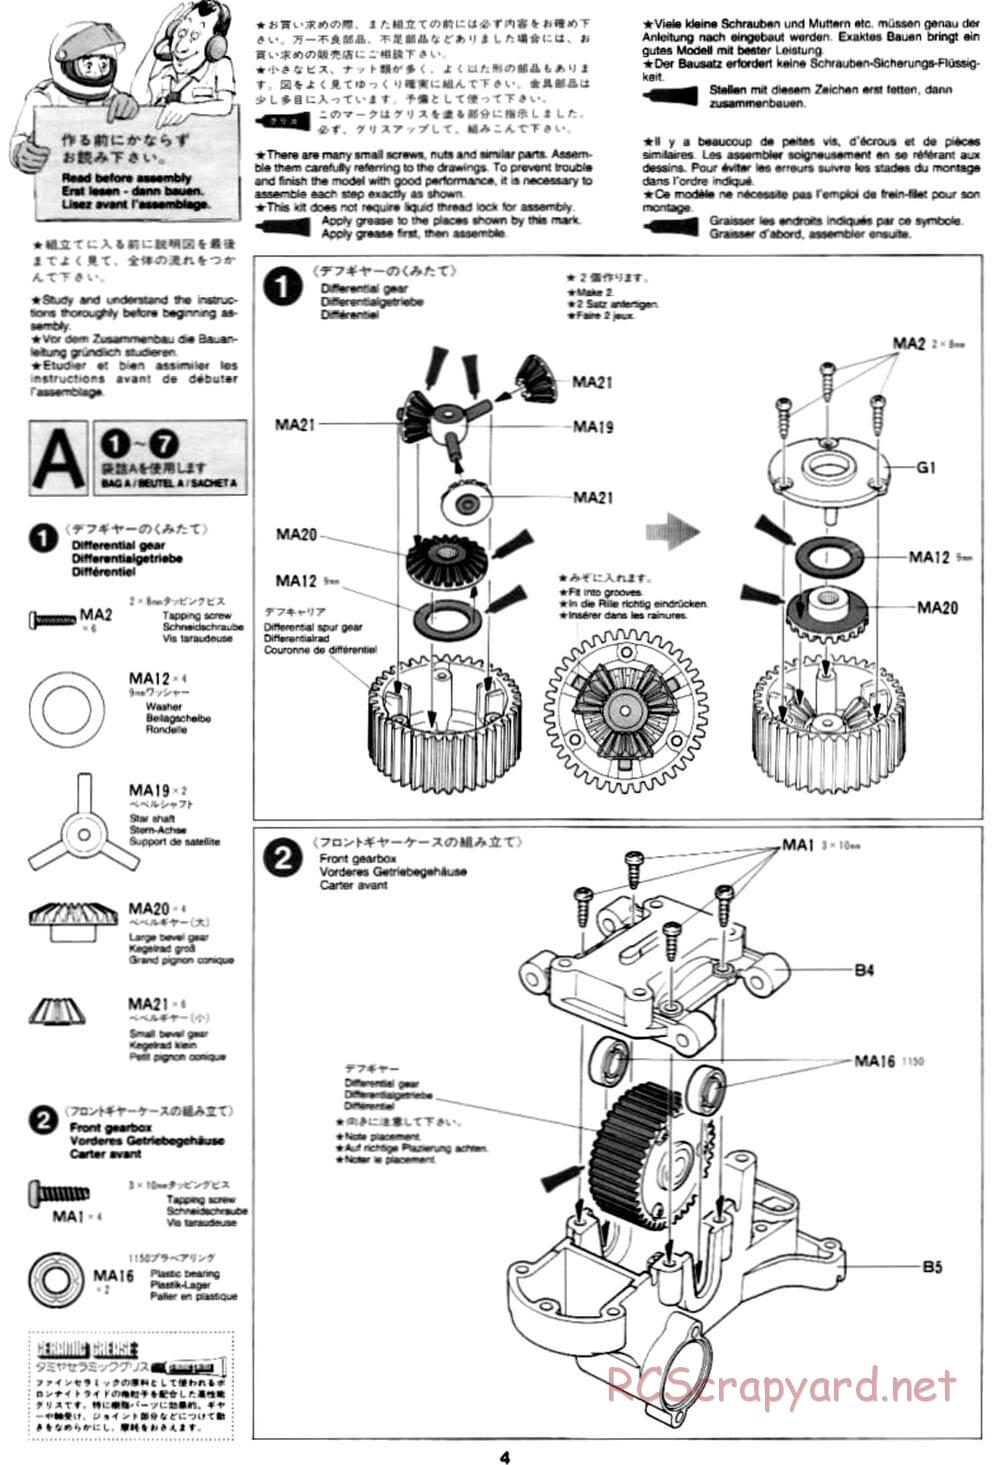 Tamiya - Mercedes CLK-GTR - TA-03R Chassis - Manual - Page 4